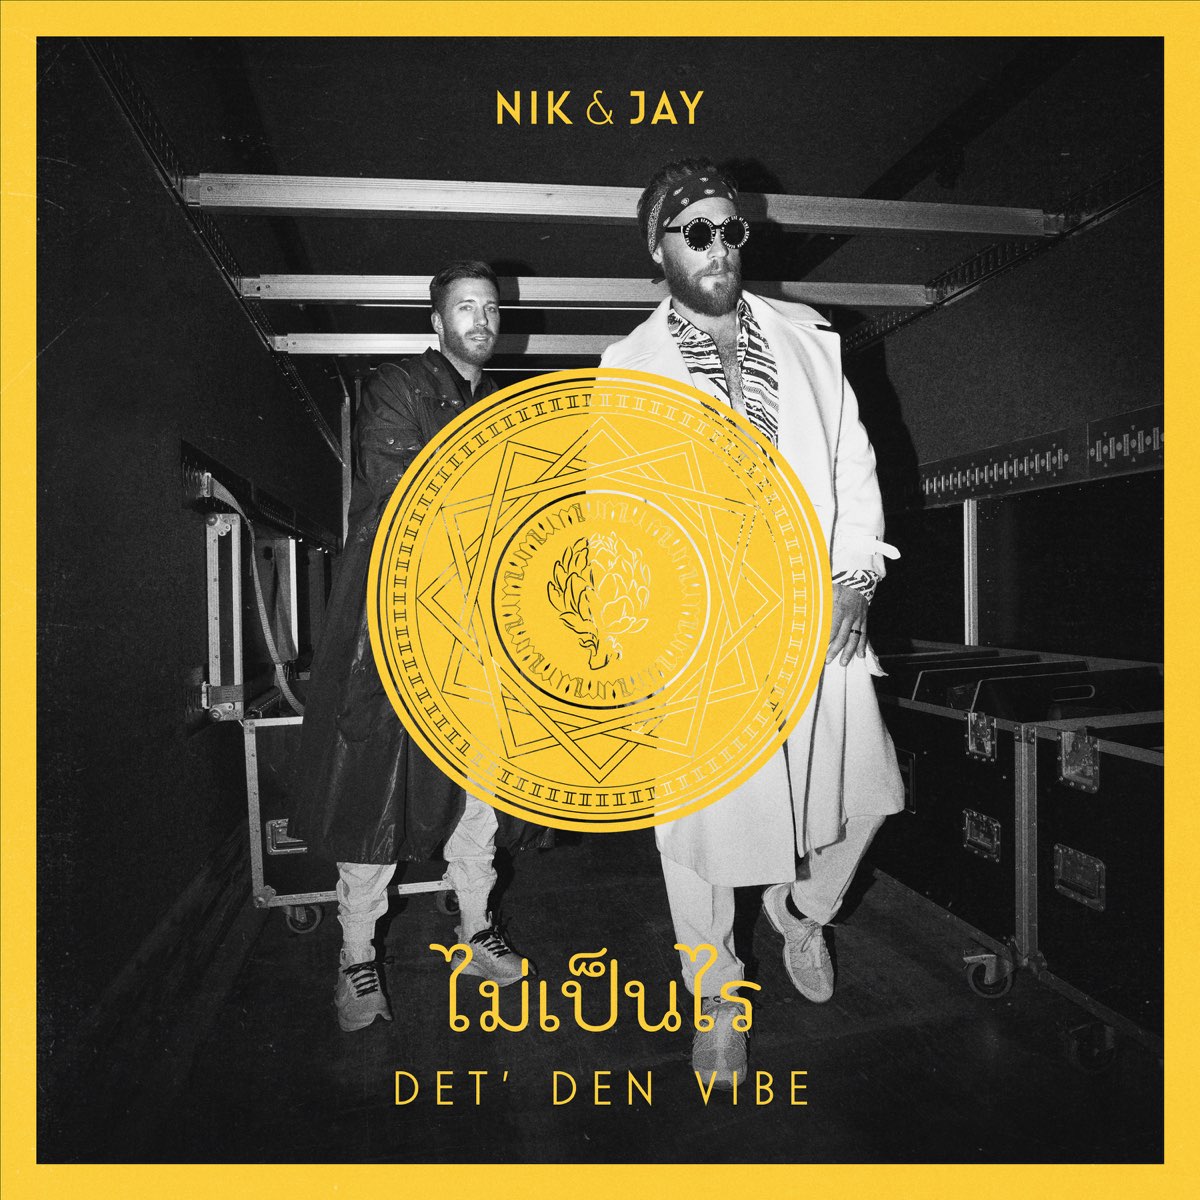 Det' Den - Single by Nik & Jay on Apple Music